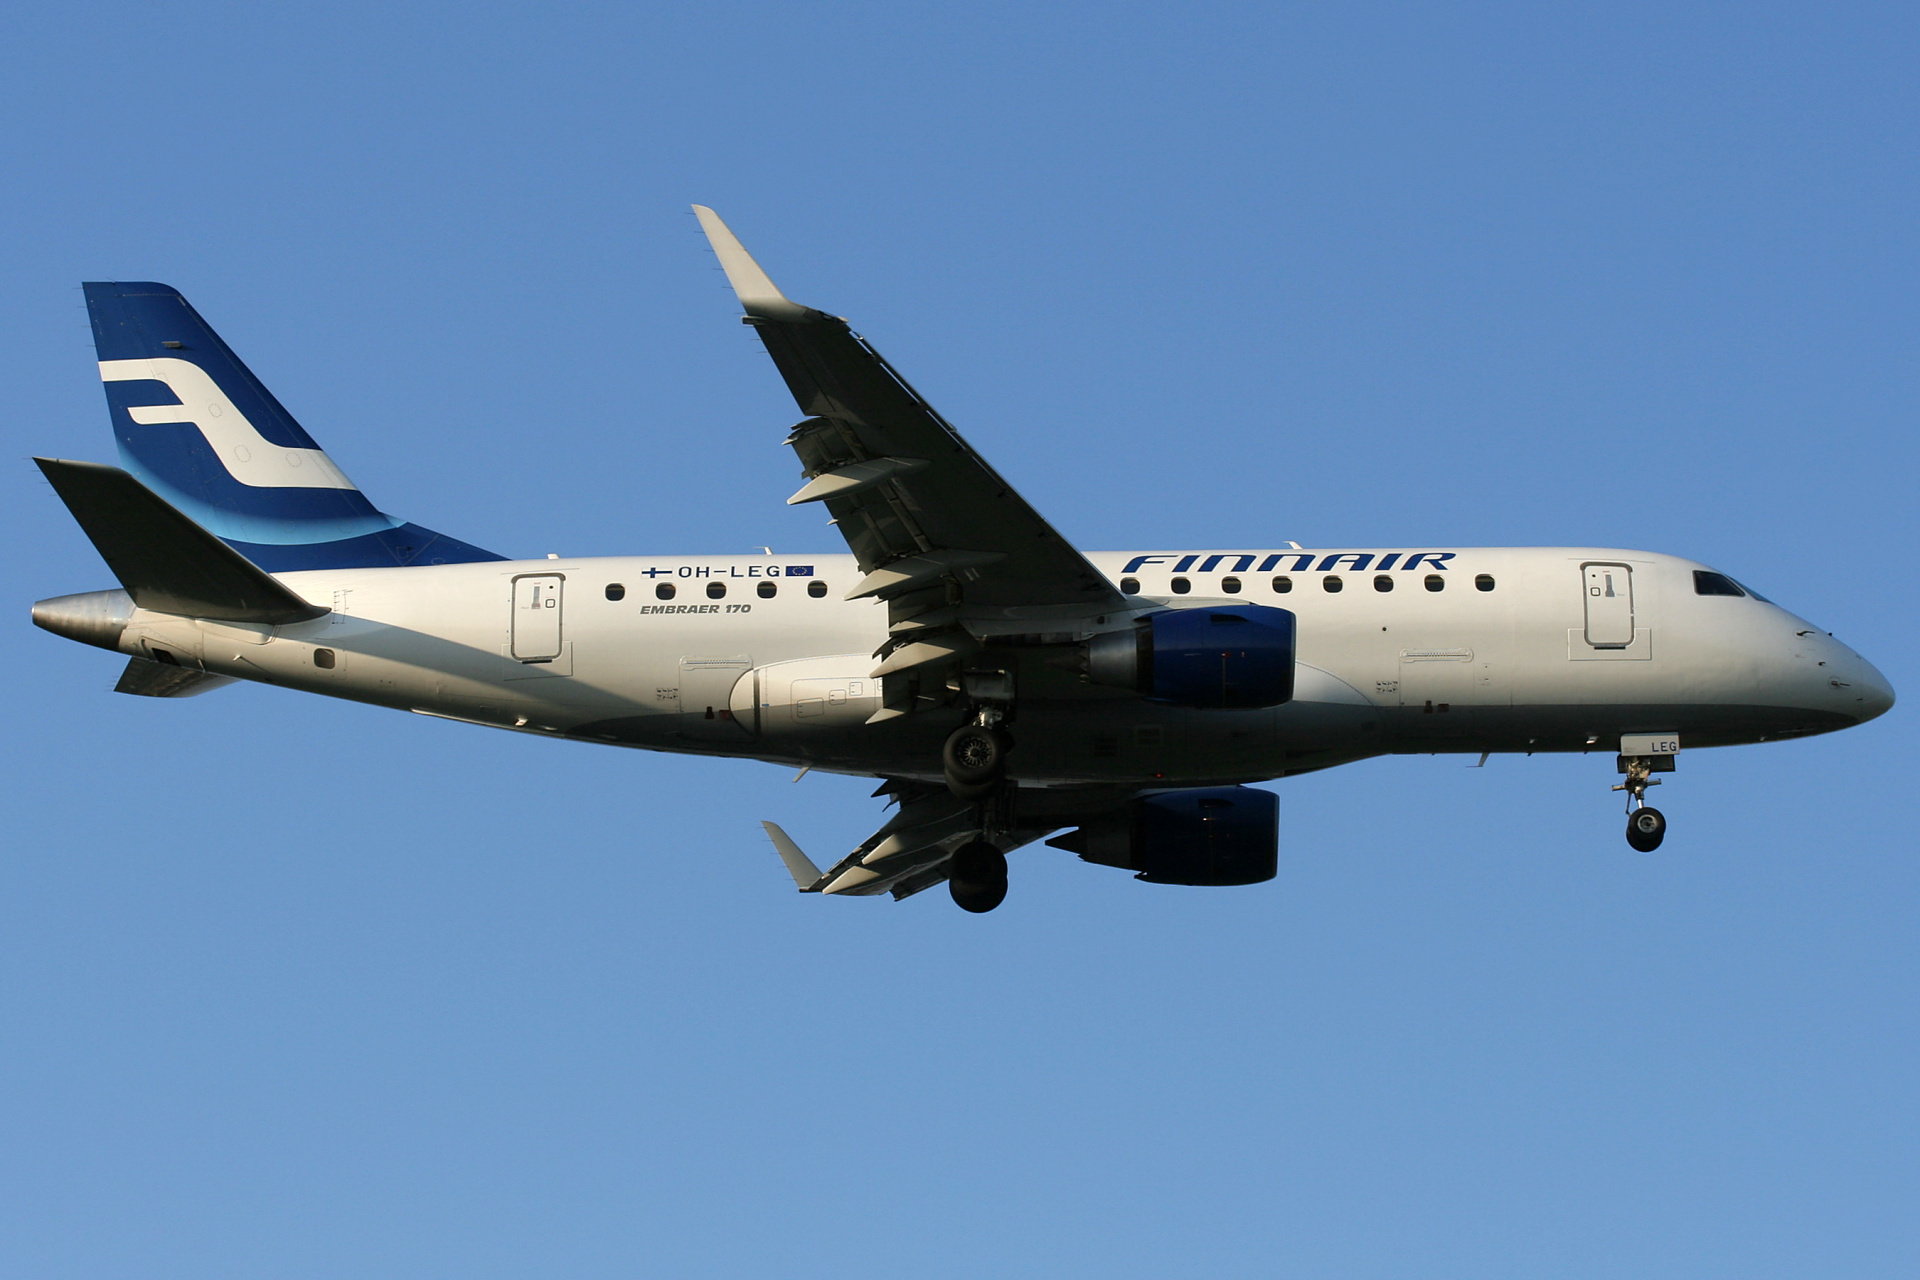 OH-LEG (Samoloty » Spotting na EPWA » Embraer E170 » Finnair)